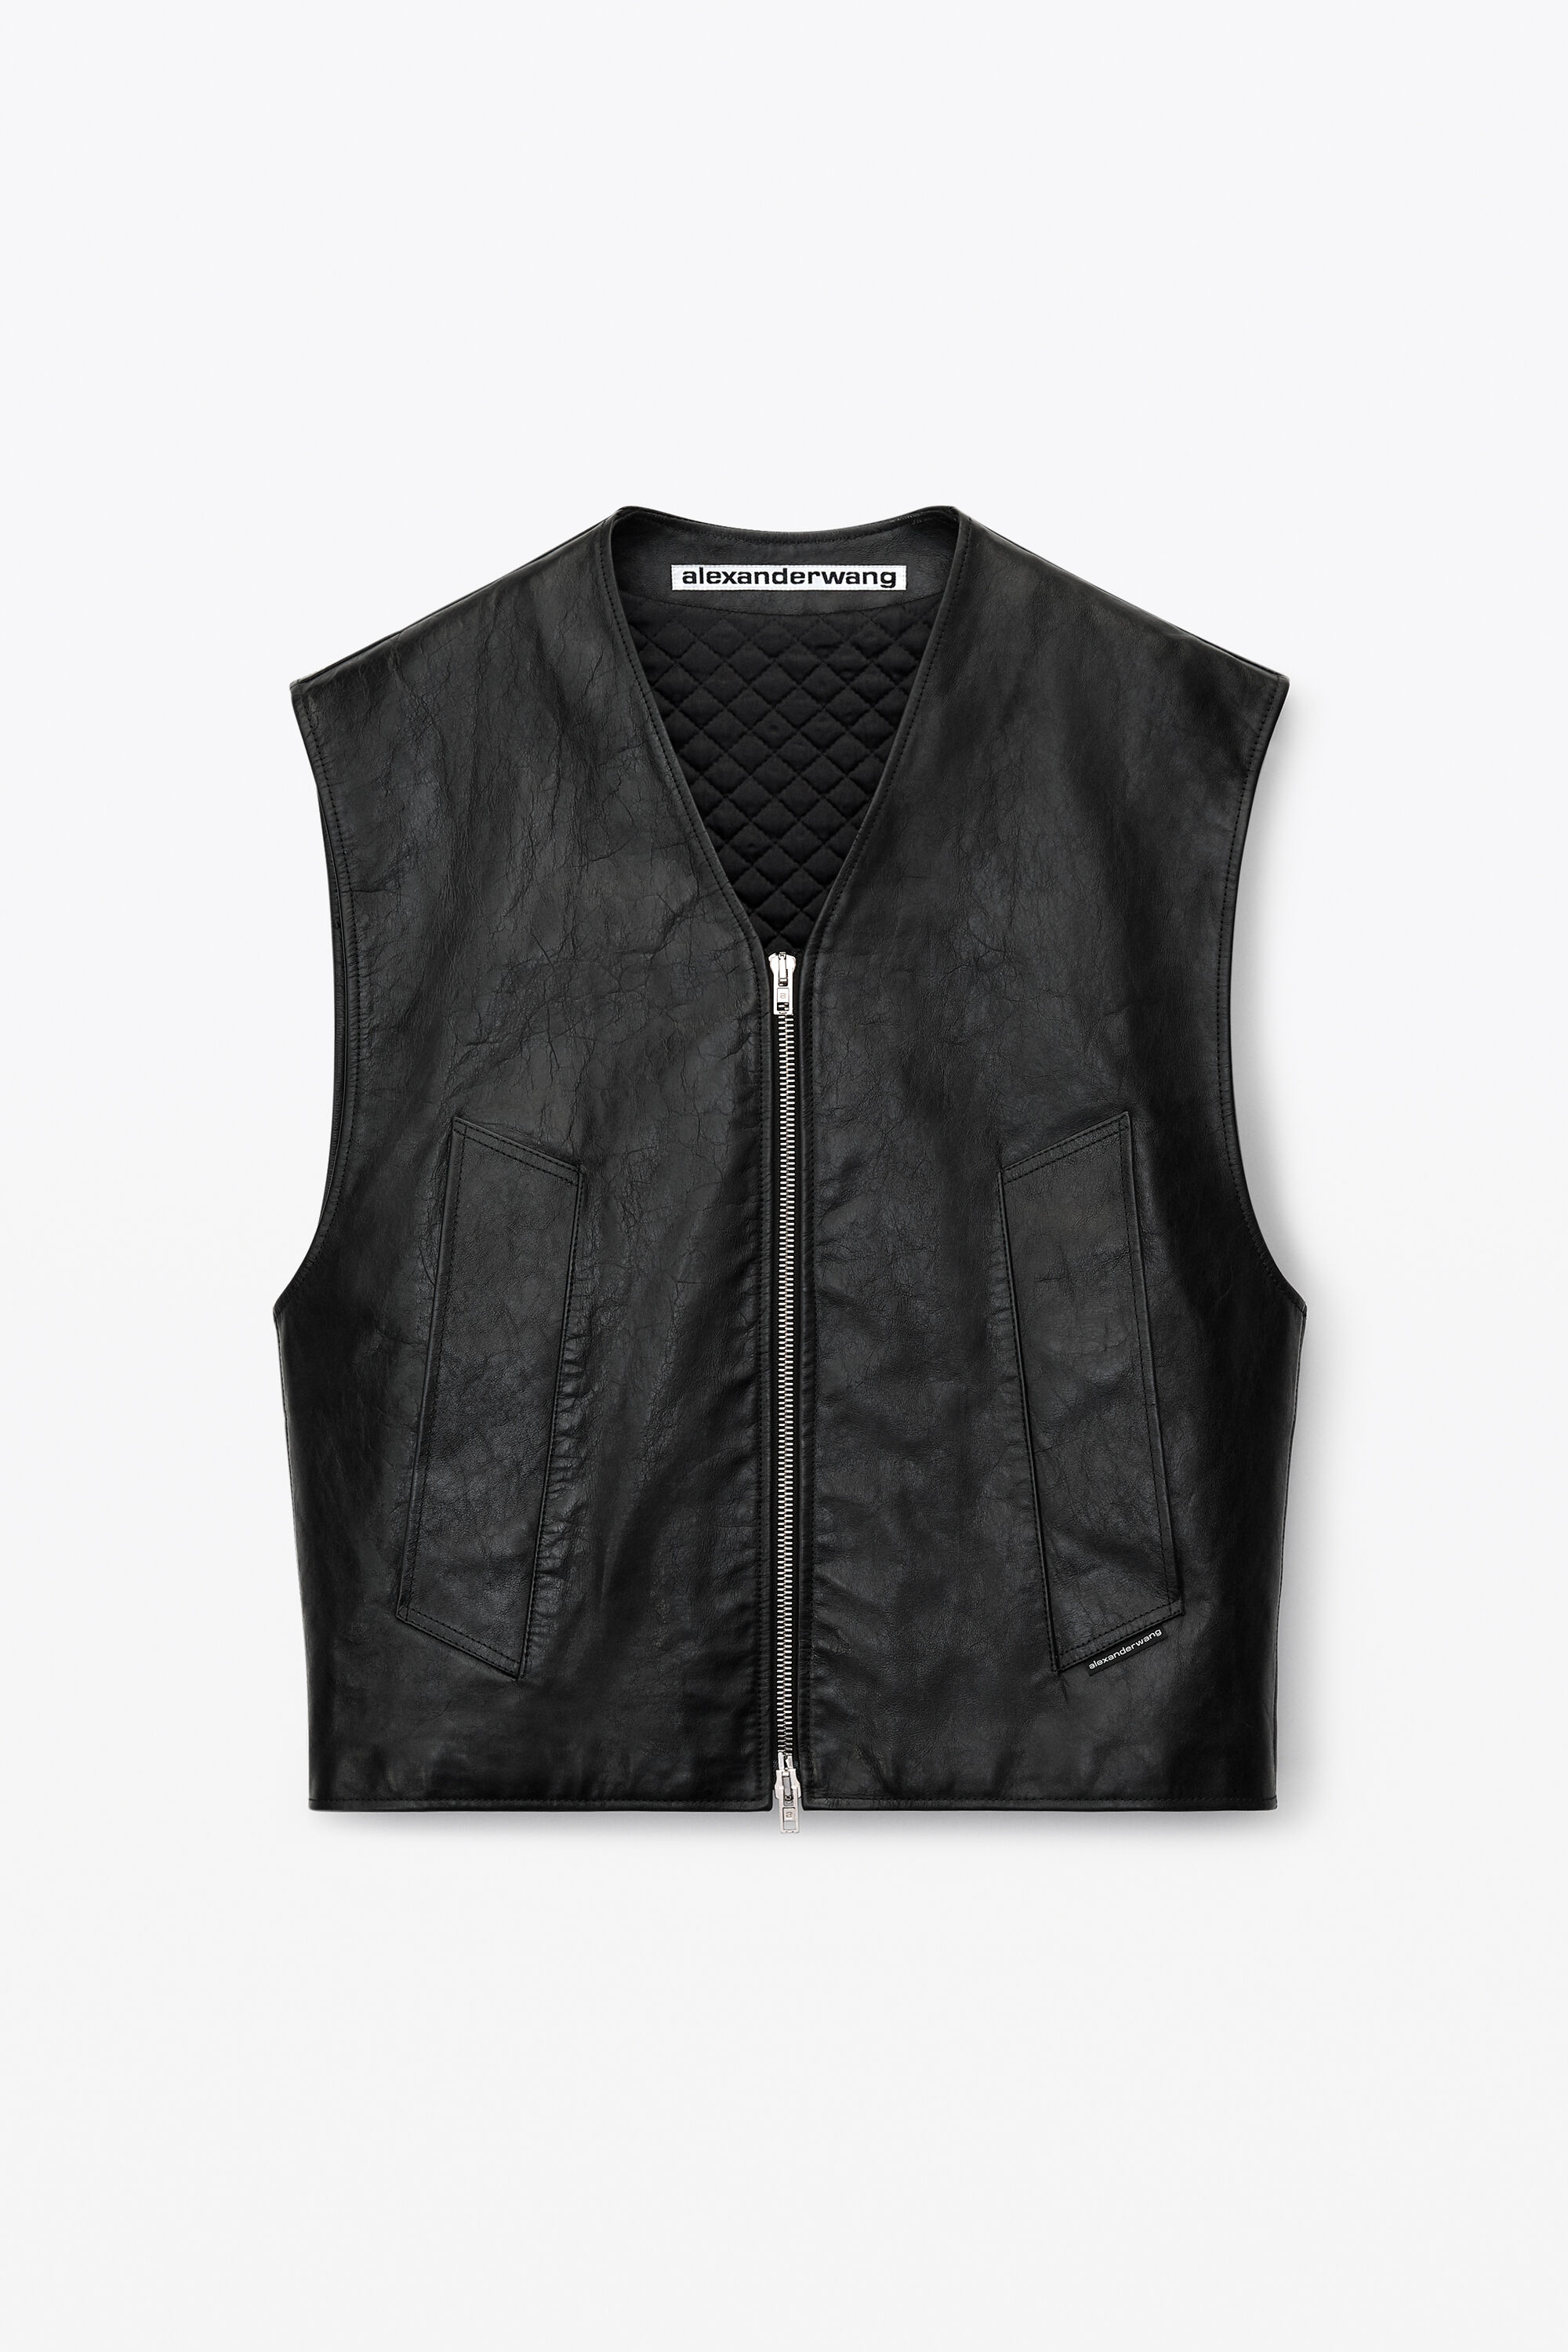 alexanderwang oversized vest in crackle patent leather BLACK 